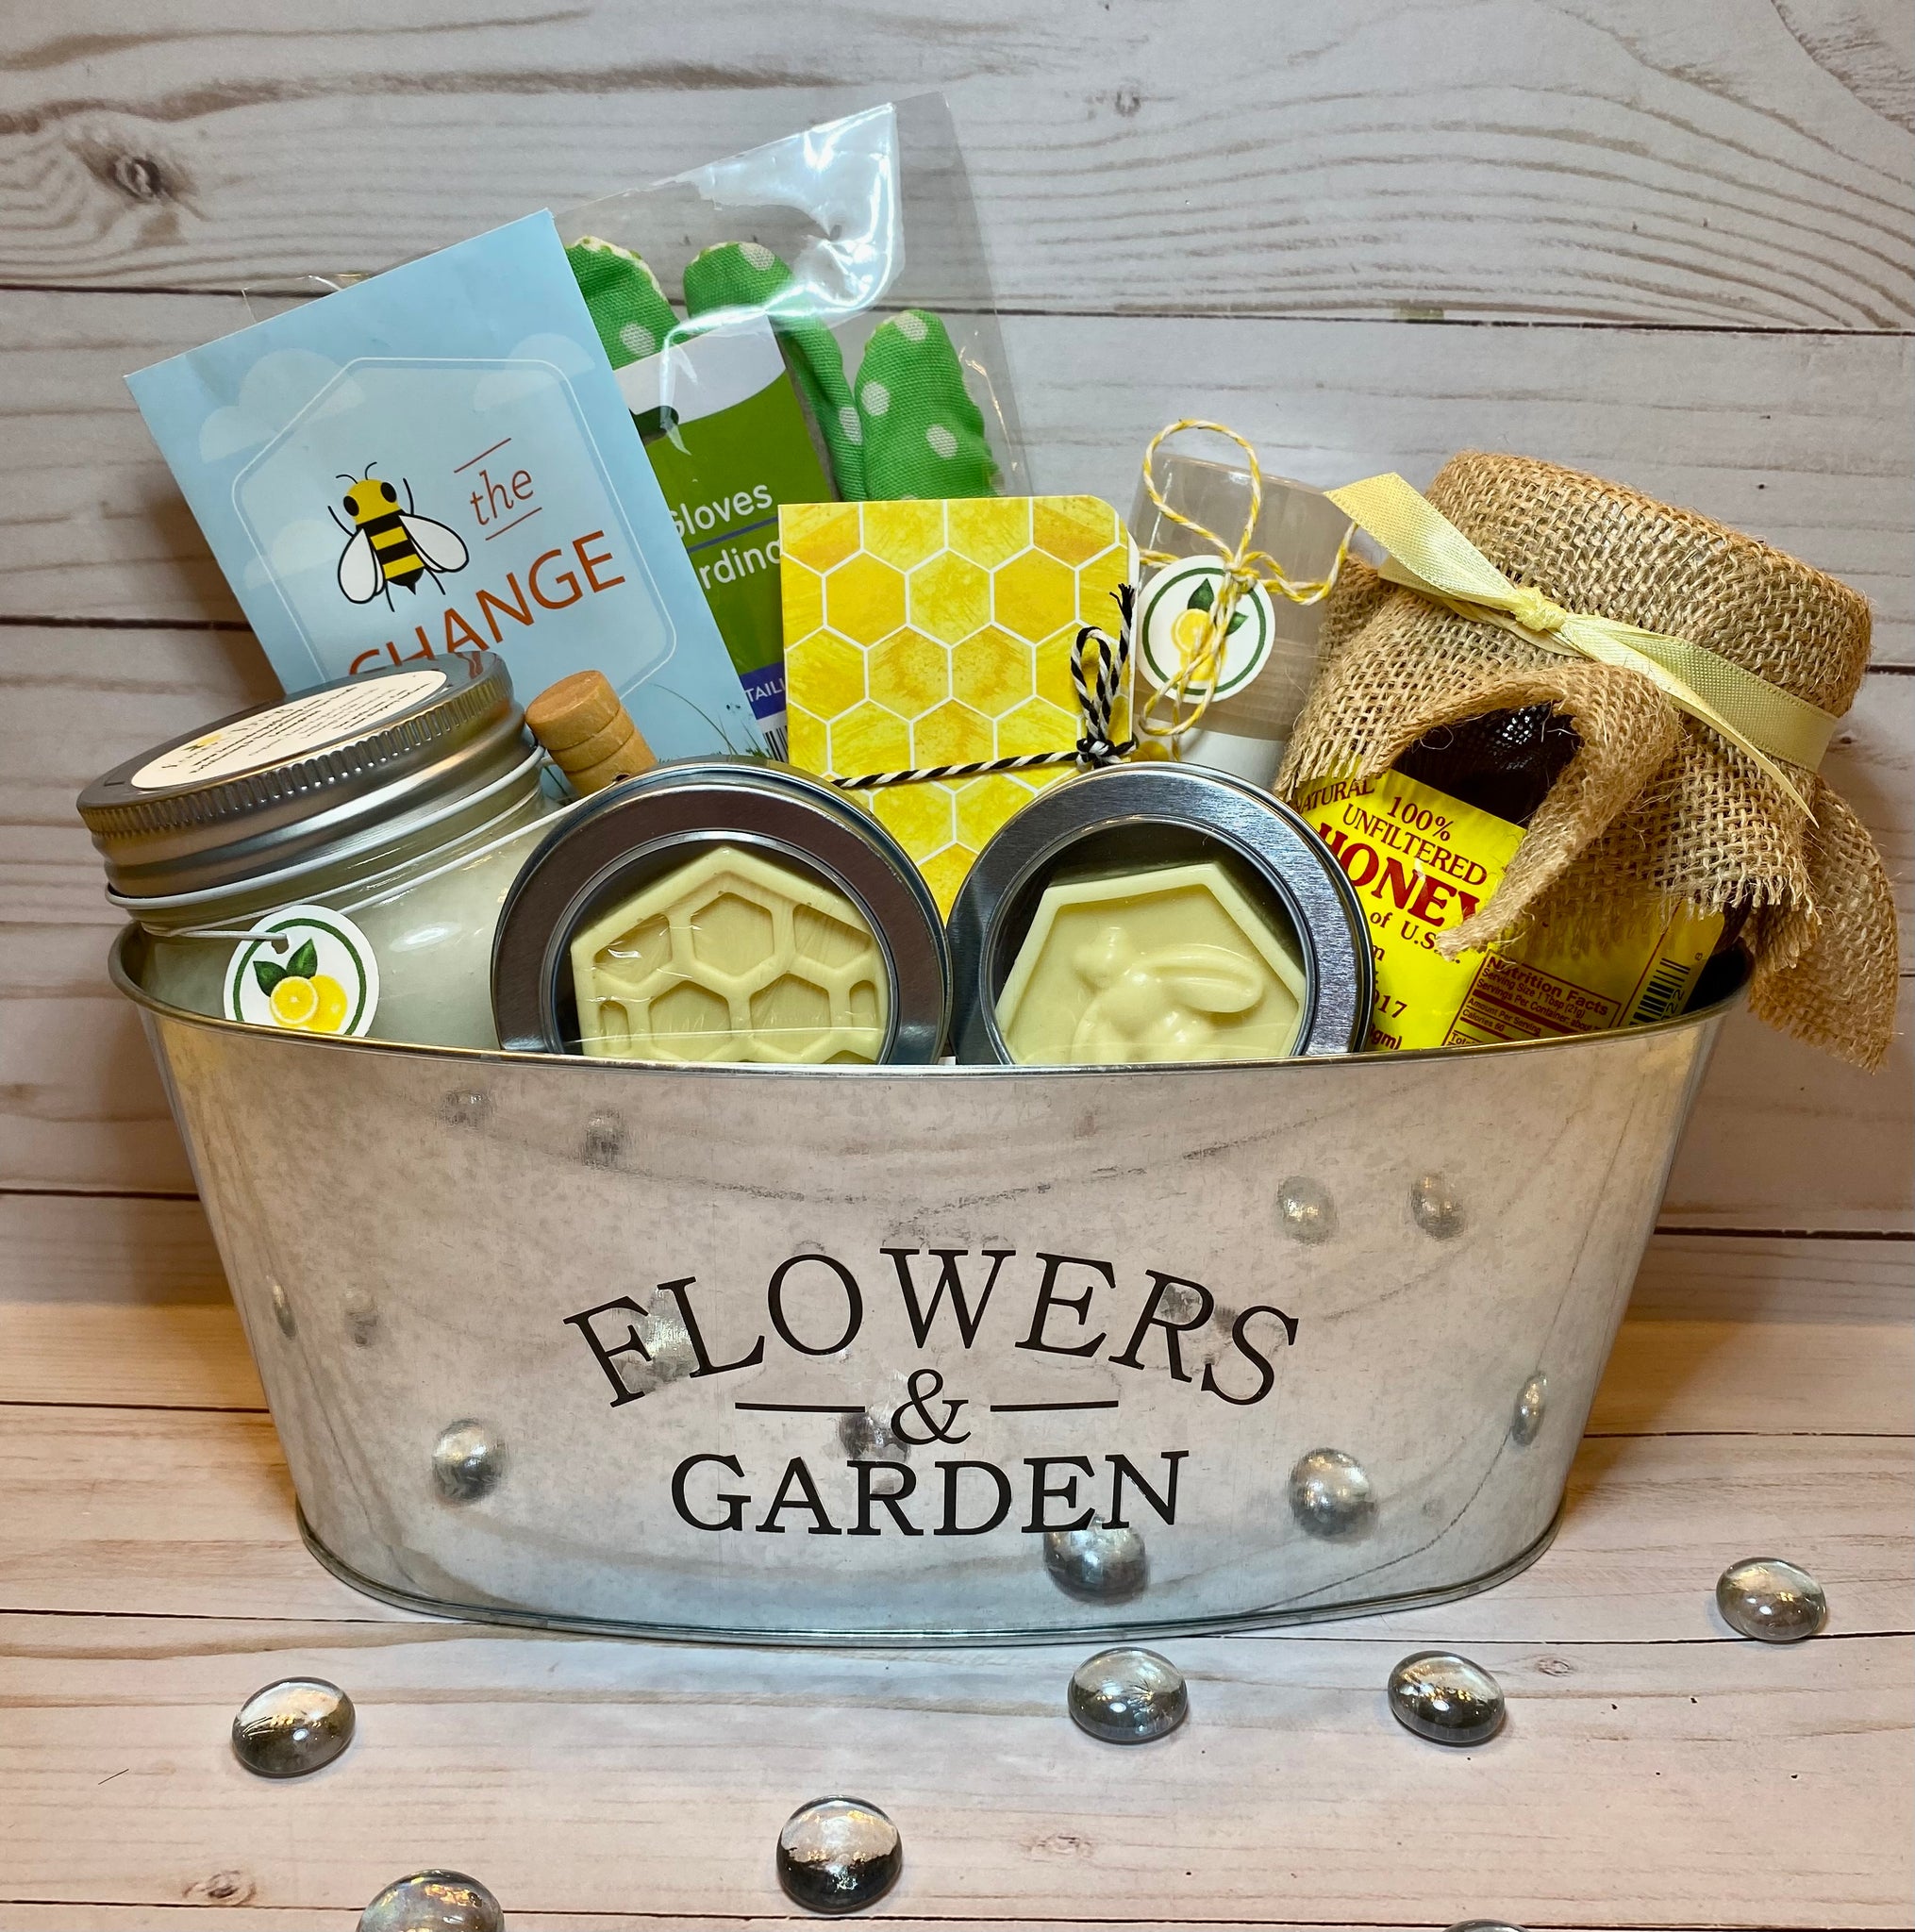 Honey Bee Gift Set – Lemon Drop Gift Shop